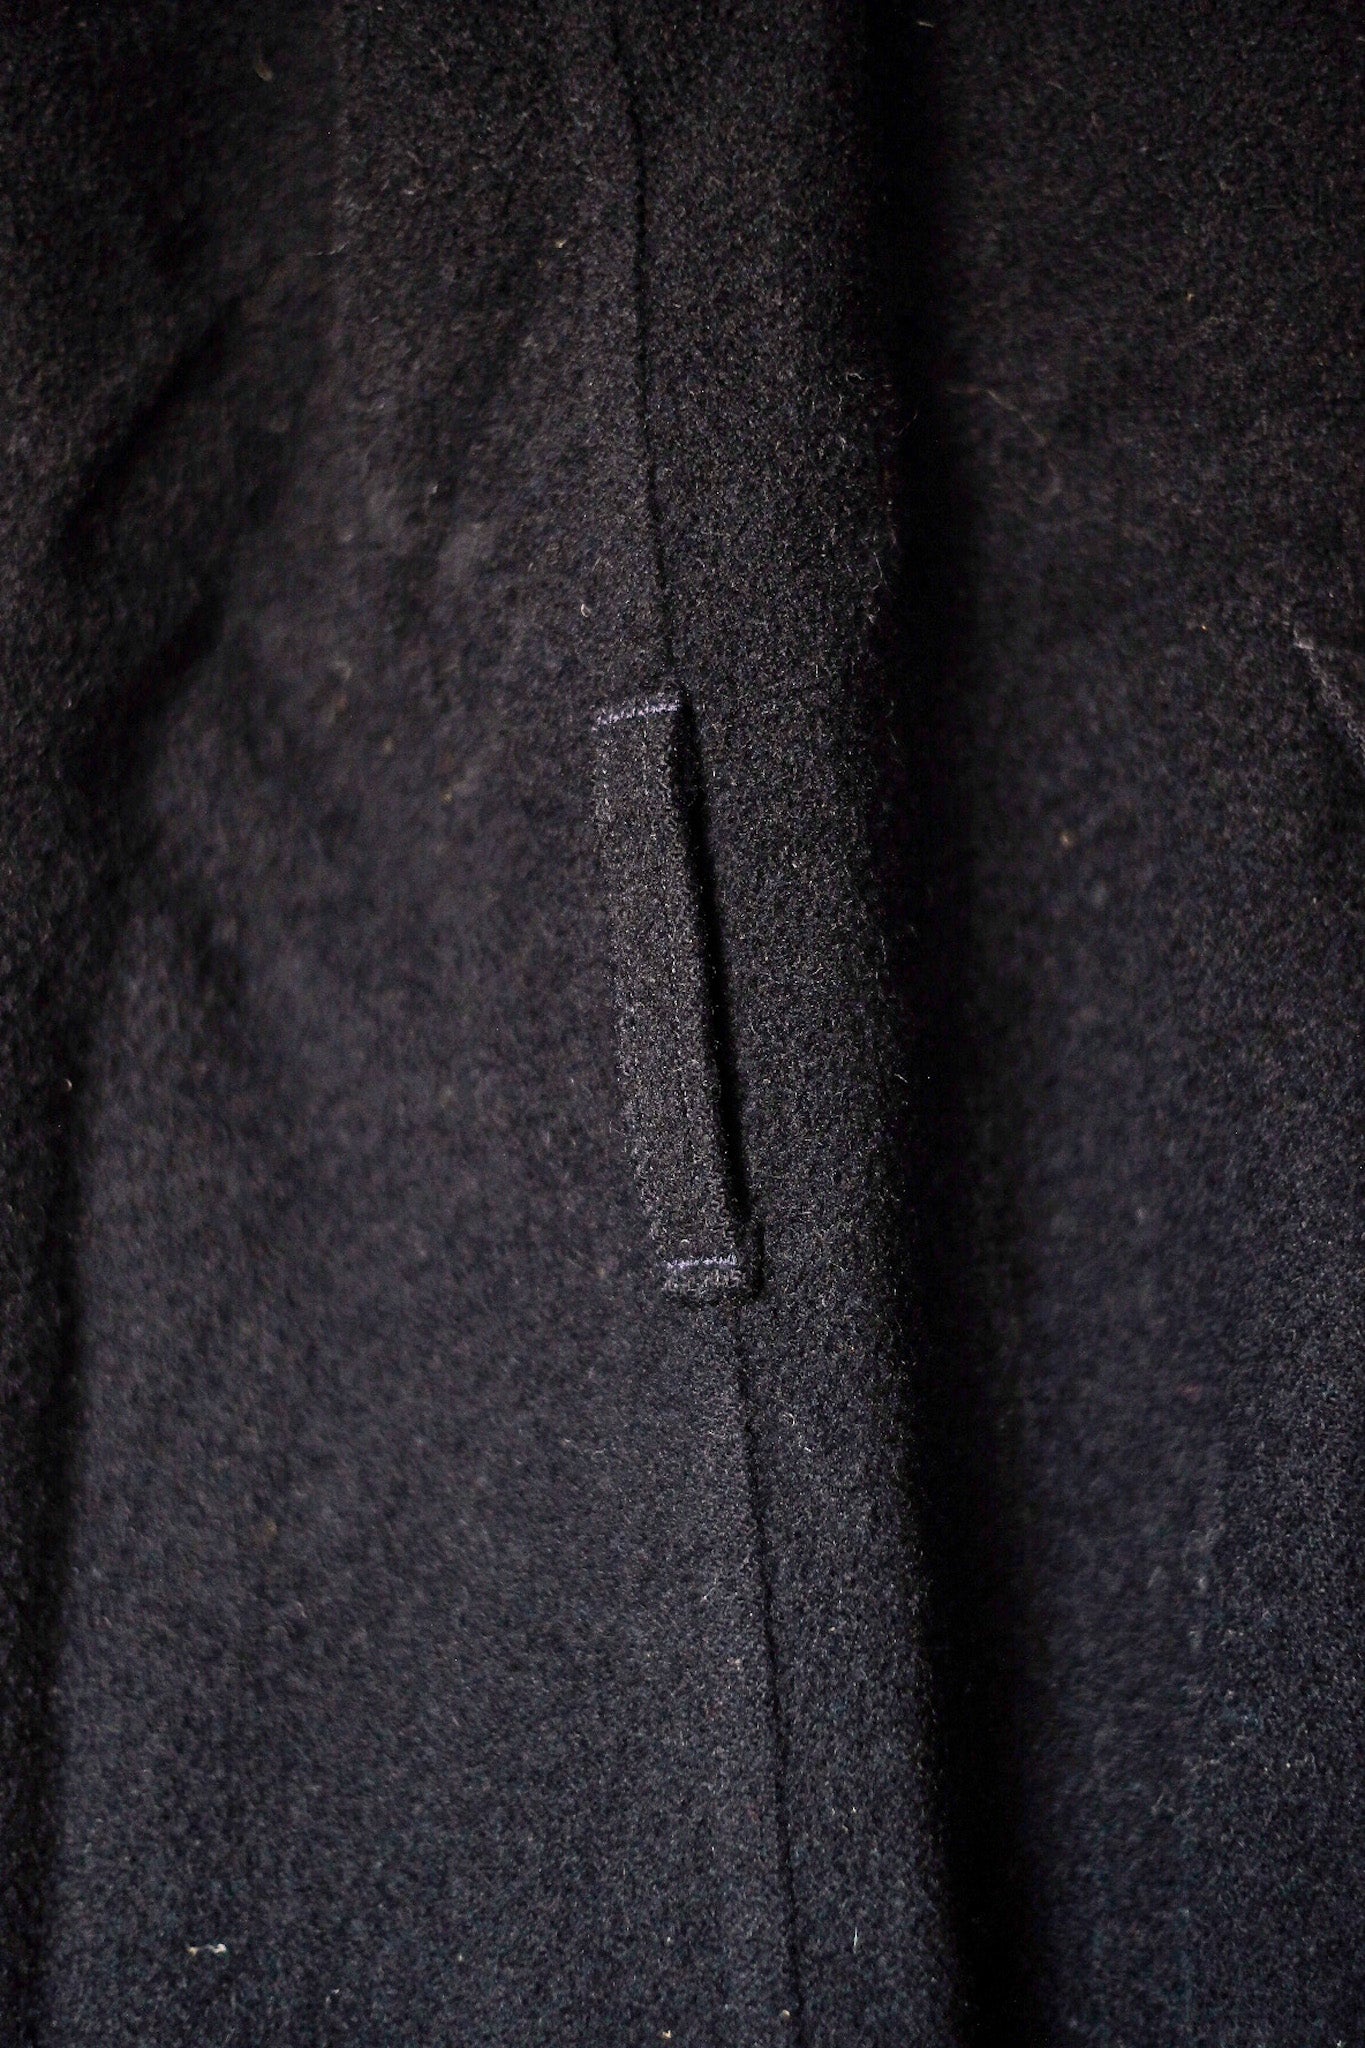 【~80's】Vintage Burberry's Single Raglan Balmacaan Coat "Wool & Camelhair"